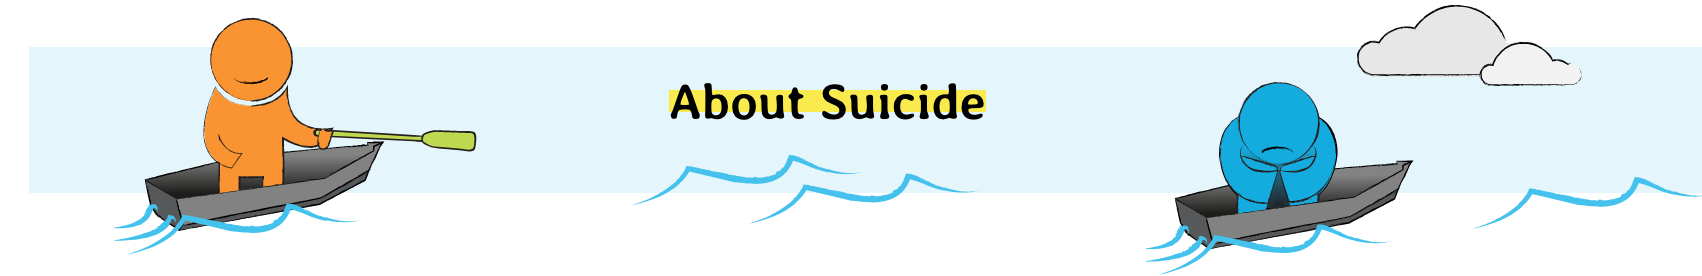 About Suicide